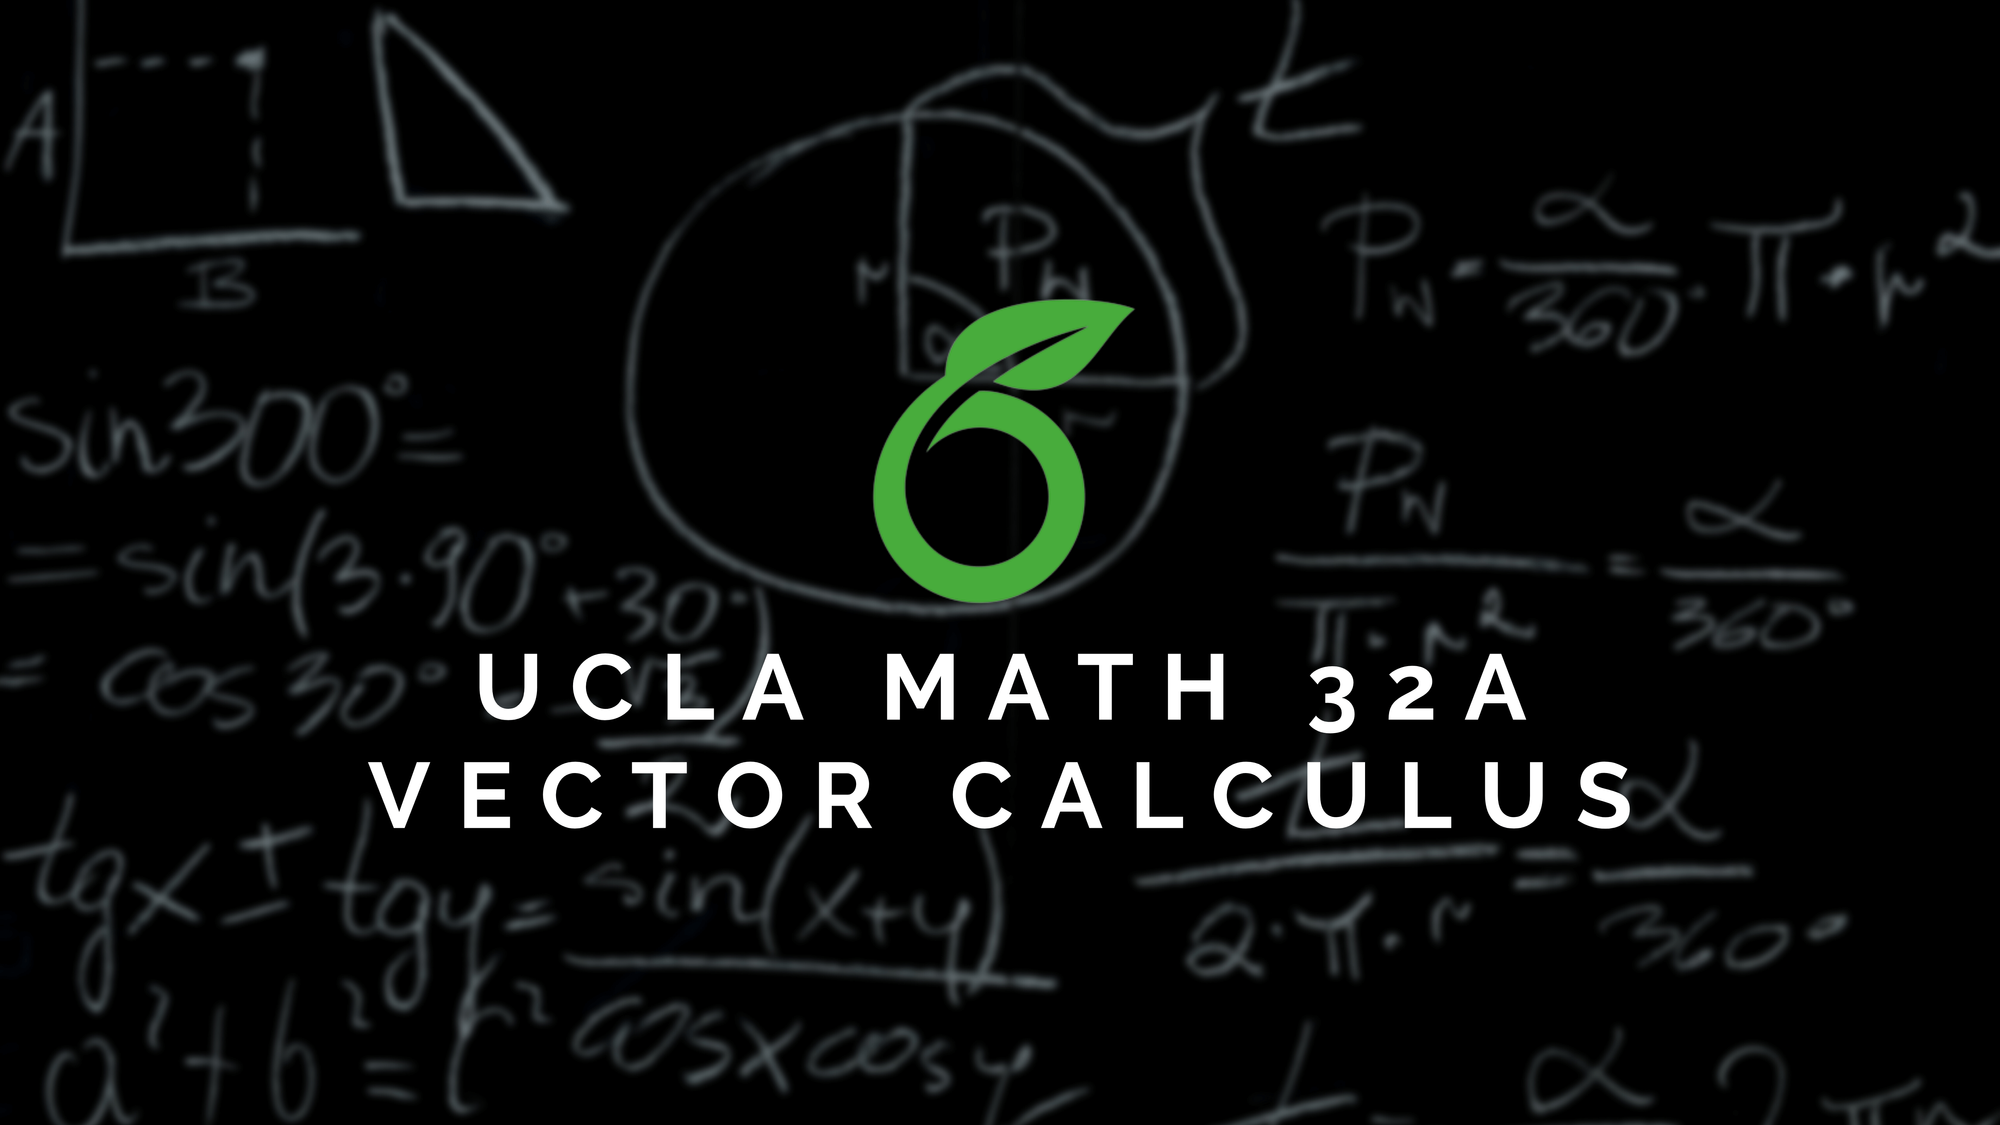 UCLA MATH 32A: Vector Calculus Notes